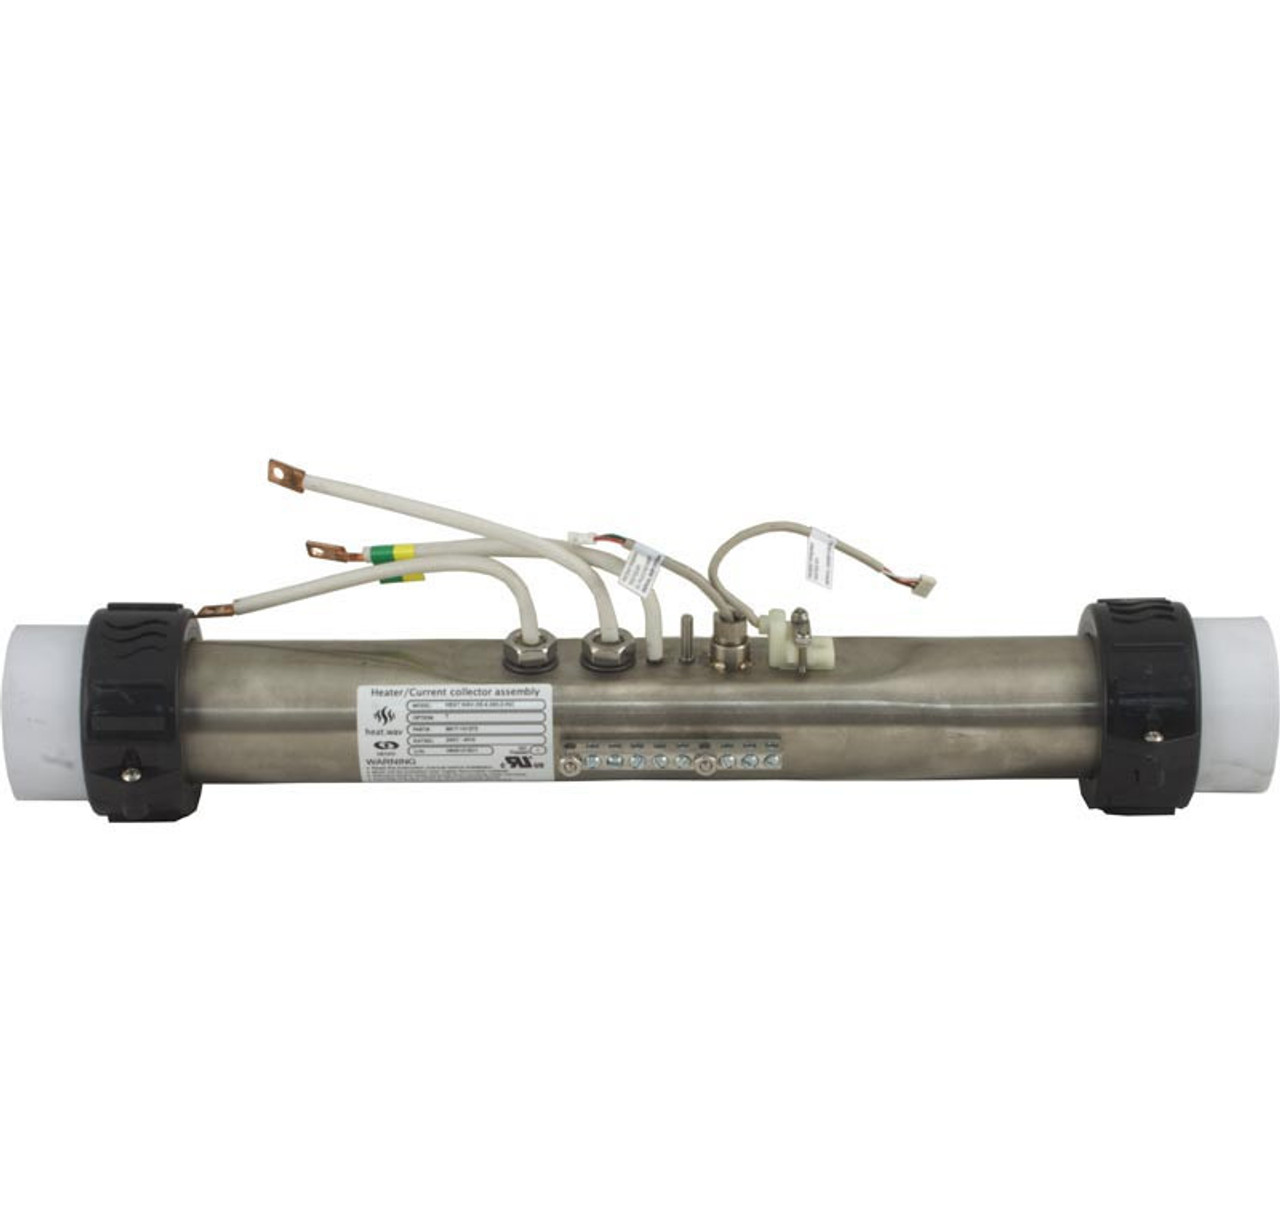 Gecko Heat.Wav 4KW 230V Heater w/ Sensors | 9920-101435